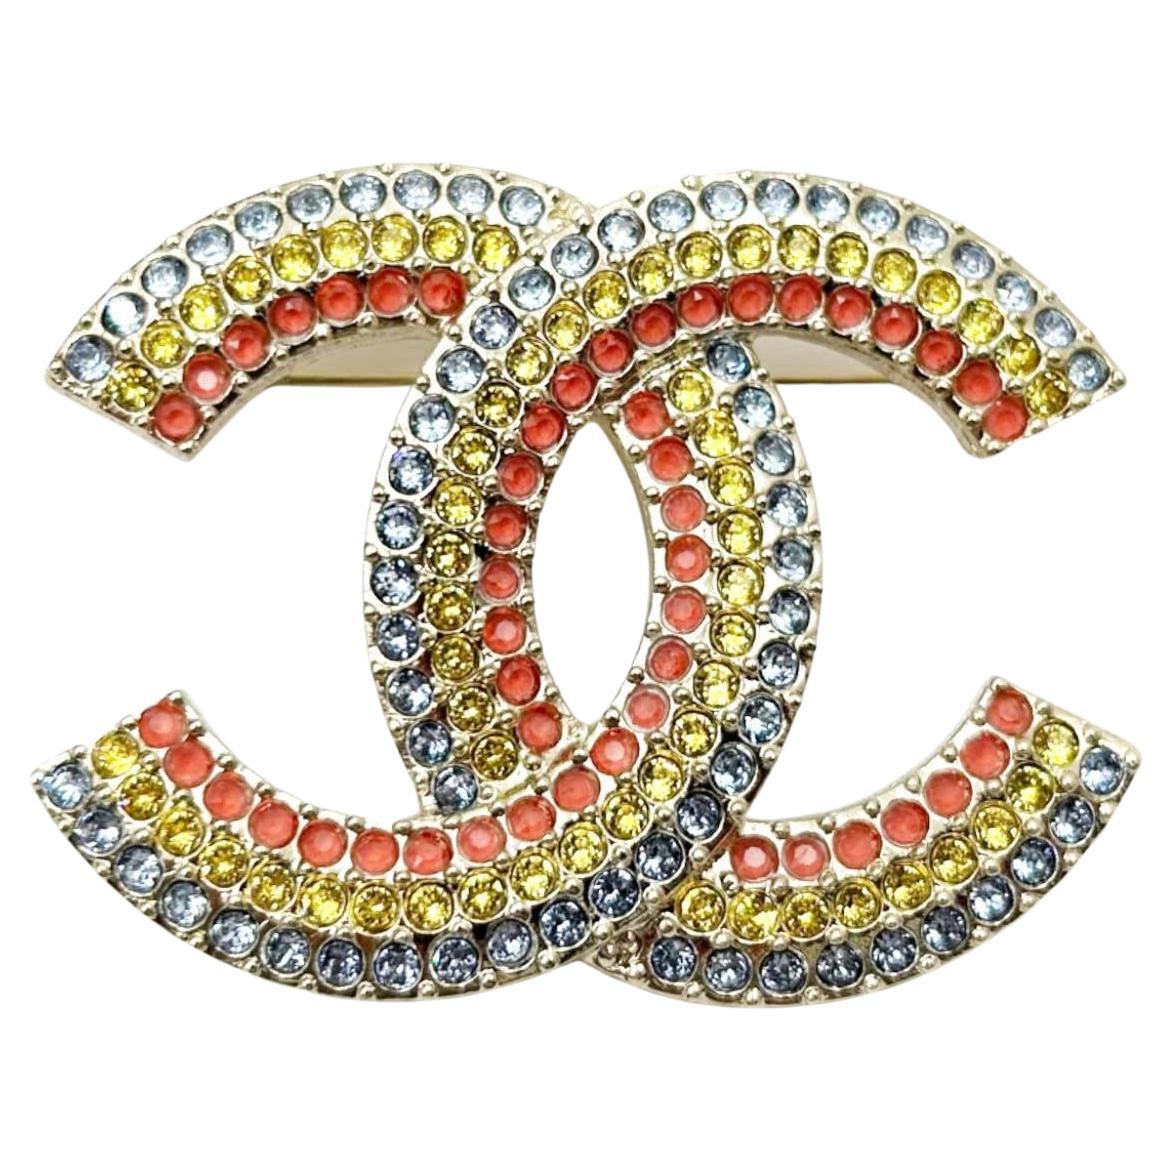 Chanel CHANEL Brooch Coco Mark Gold Multicolor Rhinestone Logo Pin Ladies